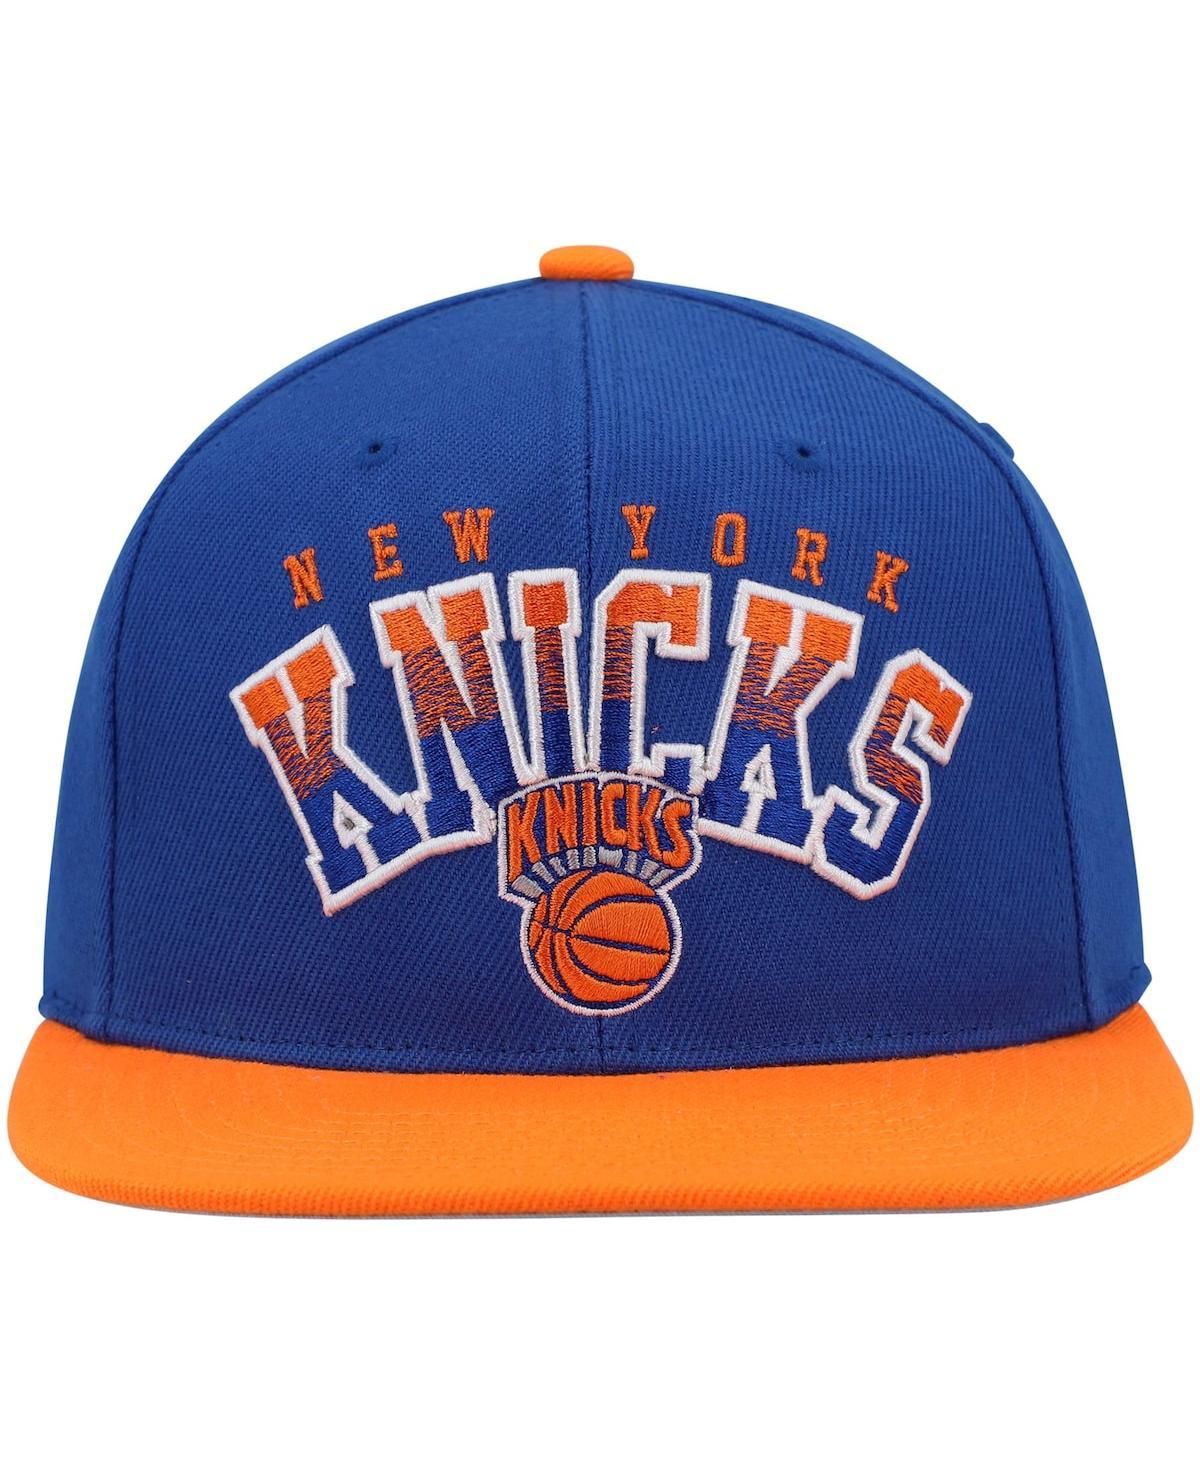 Men's Mitchell & Ness Orange/Blue New York Knicks Hardwood